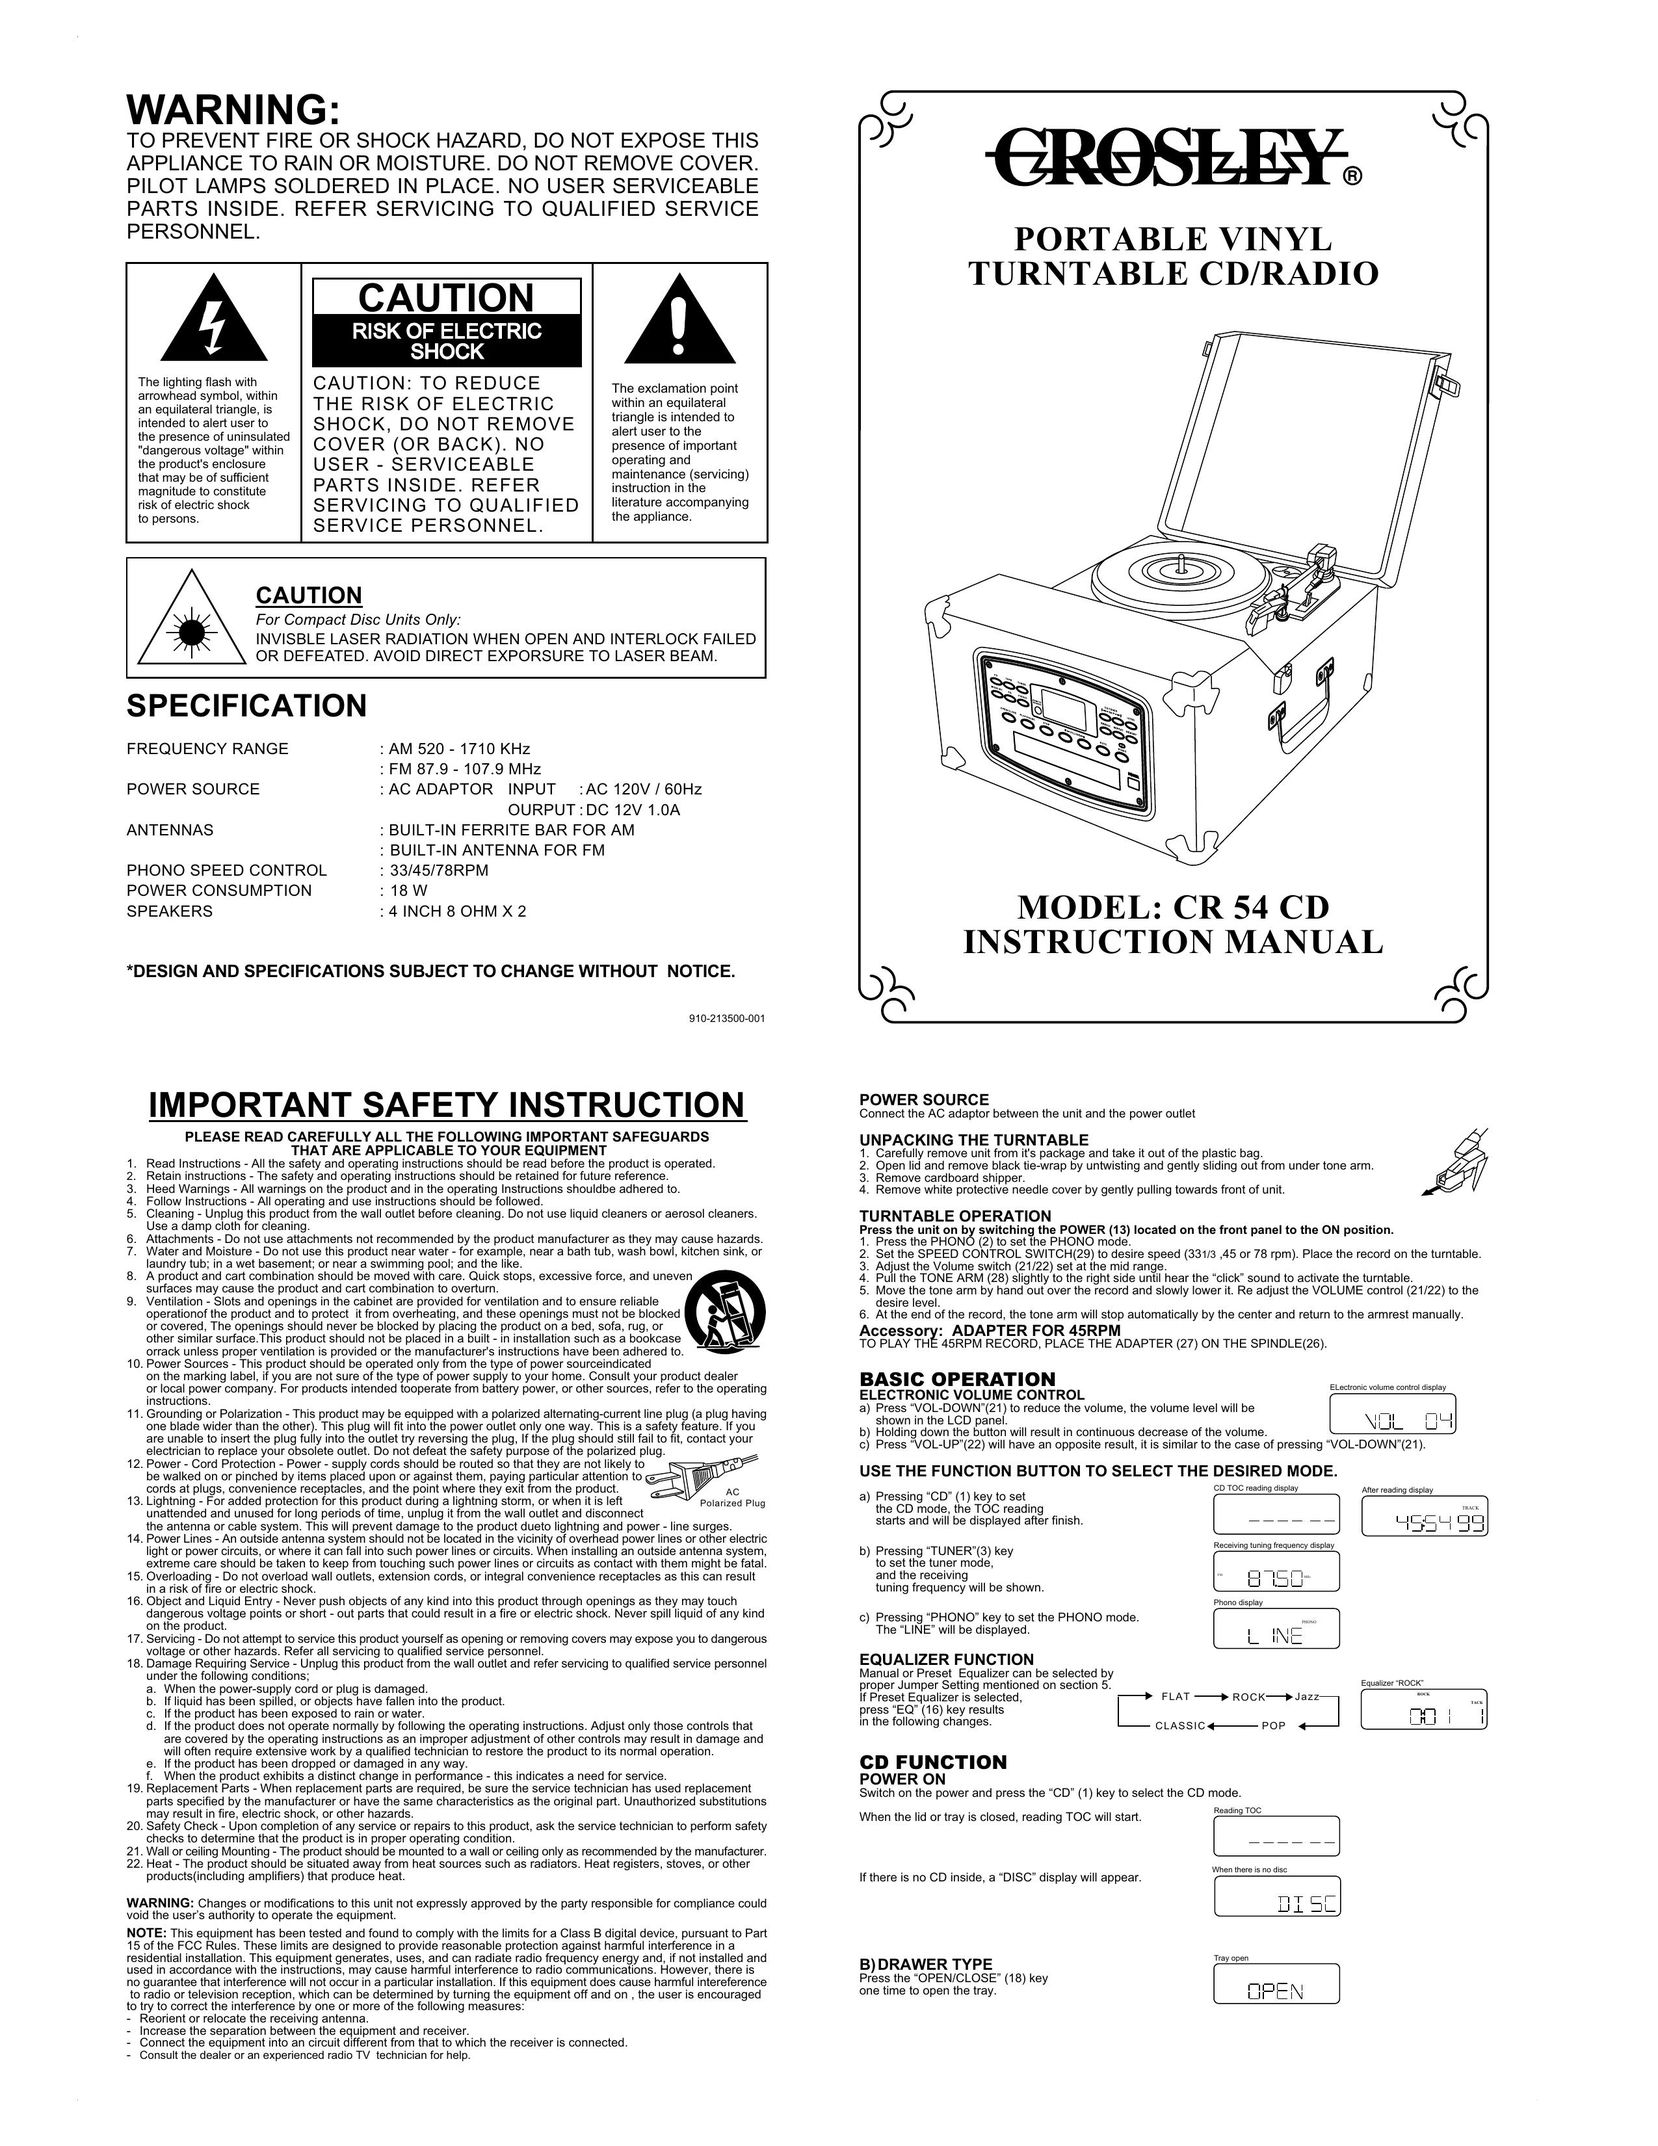 Crosley CR 54 CD Turntable User Manual